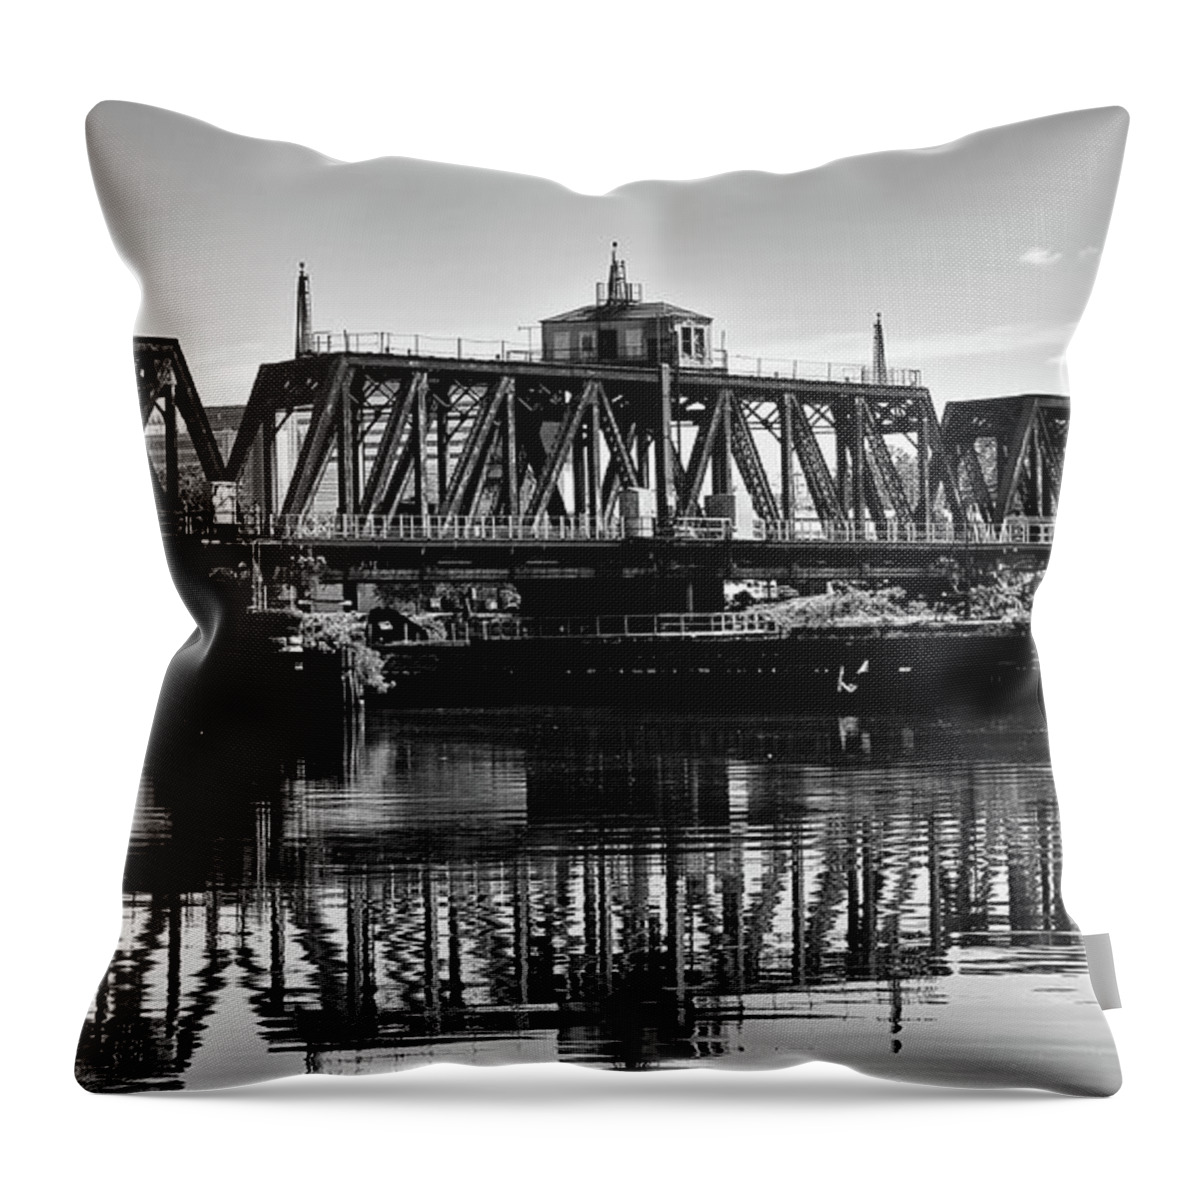 B&w Throw Pillow featuring the photograph Old Railroad Swing Bridge by Louis Dallara